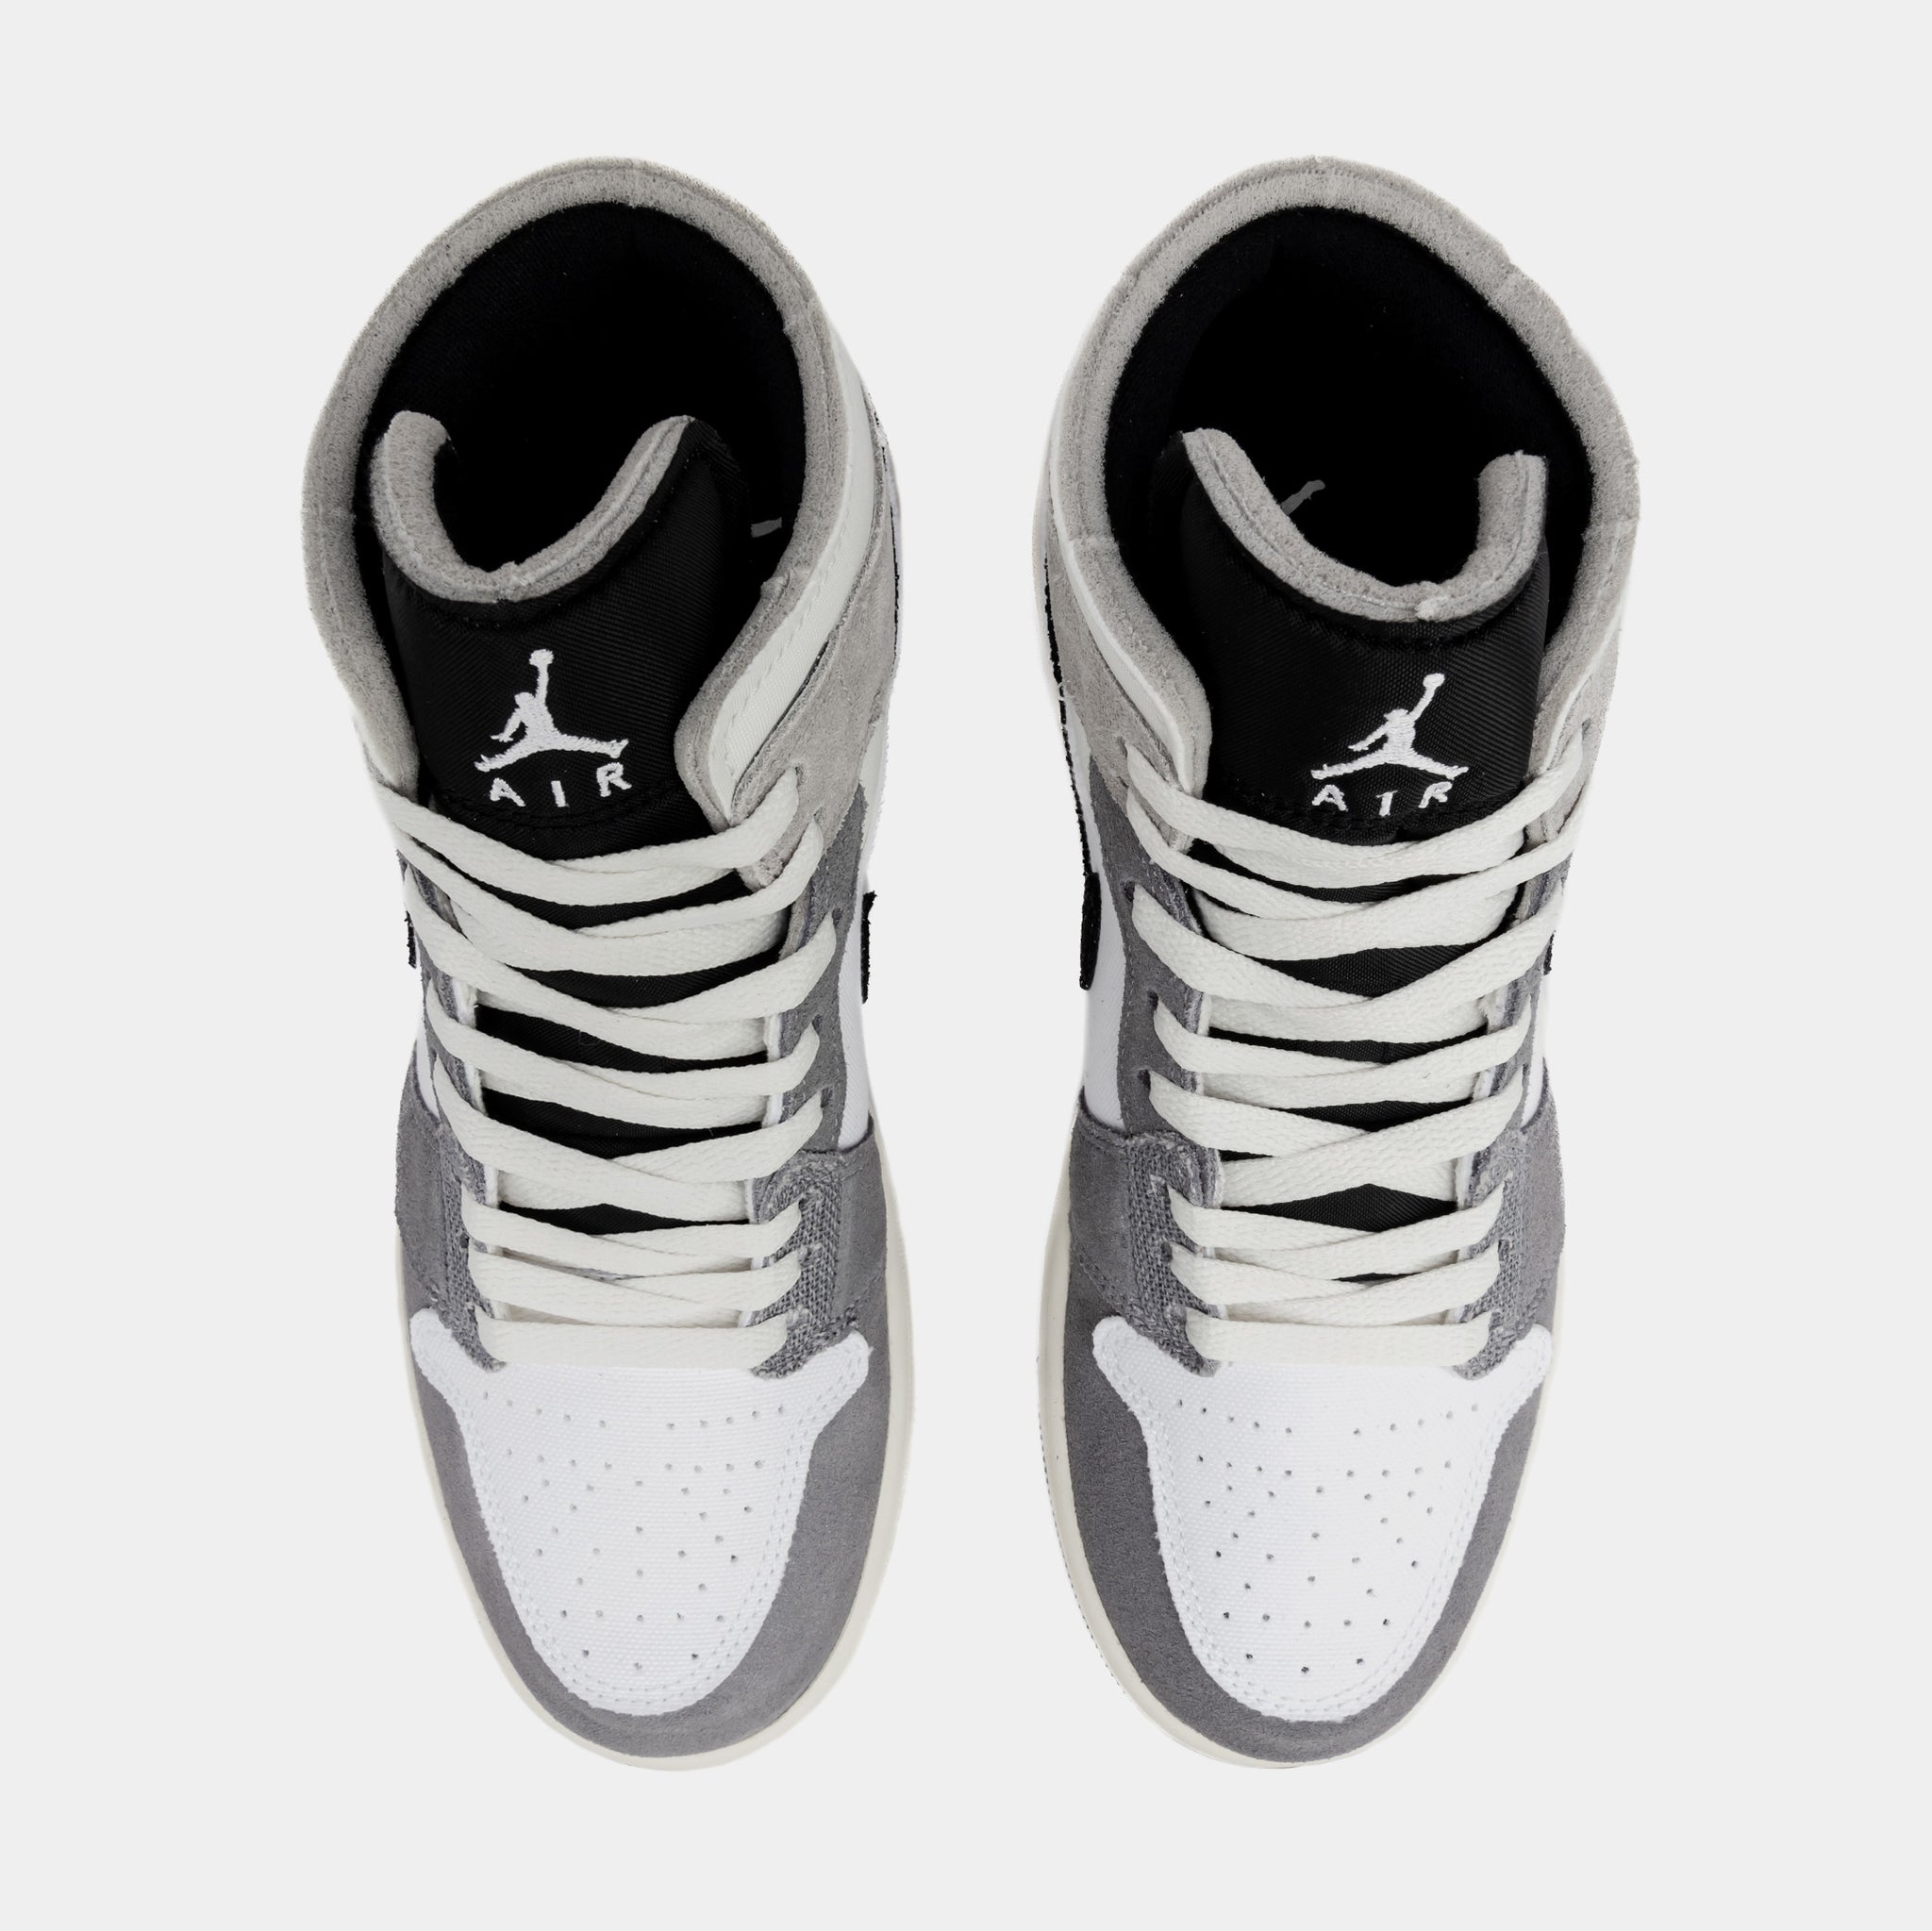 Air Jordan 1 Retro Mid Craft Cement Grey Mens Lifestyle Shoes (Black/White)